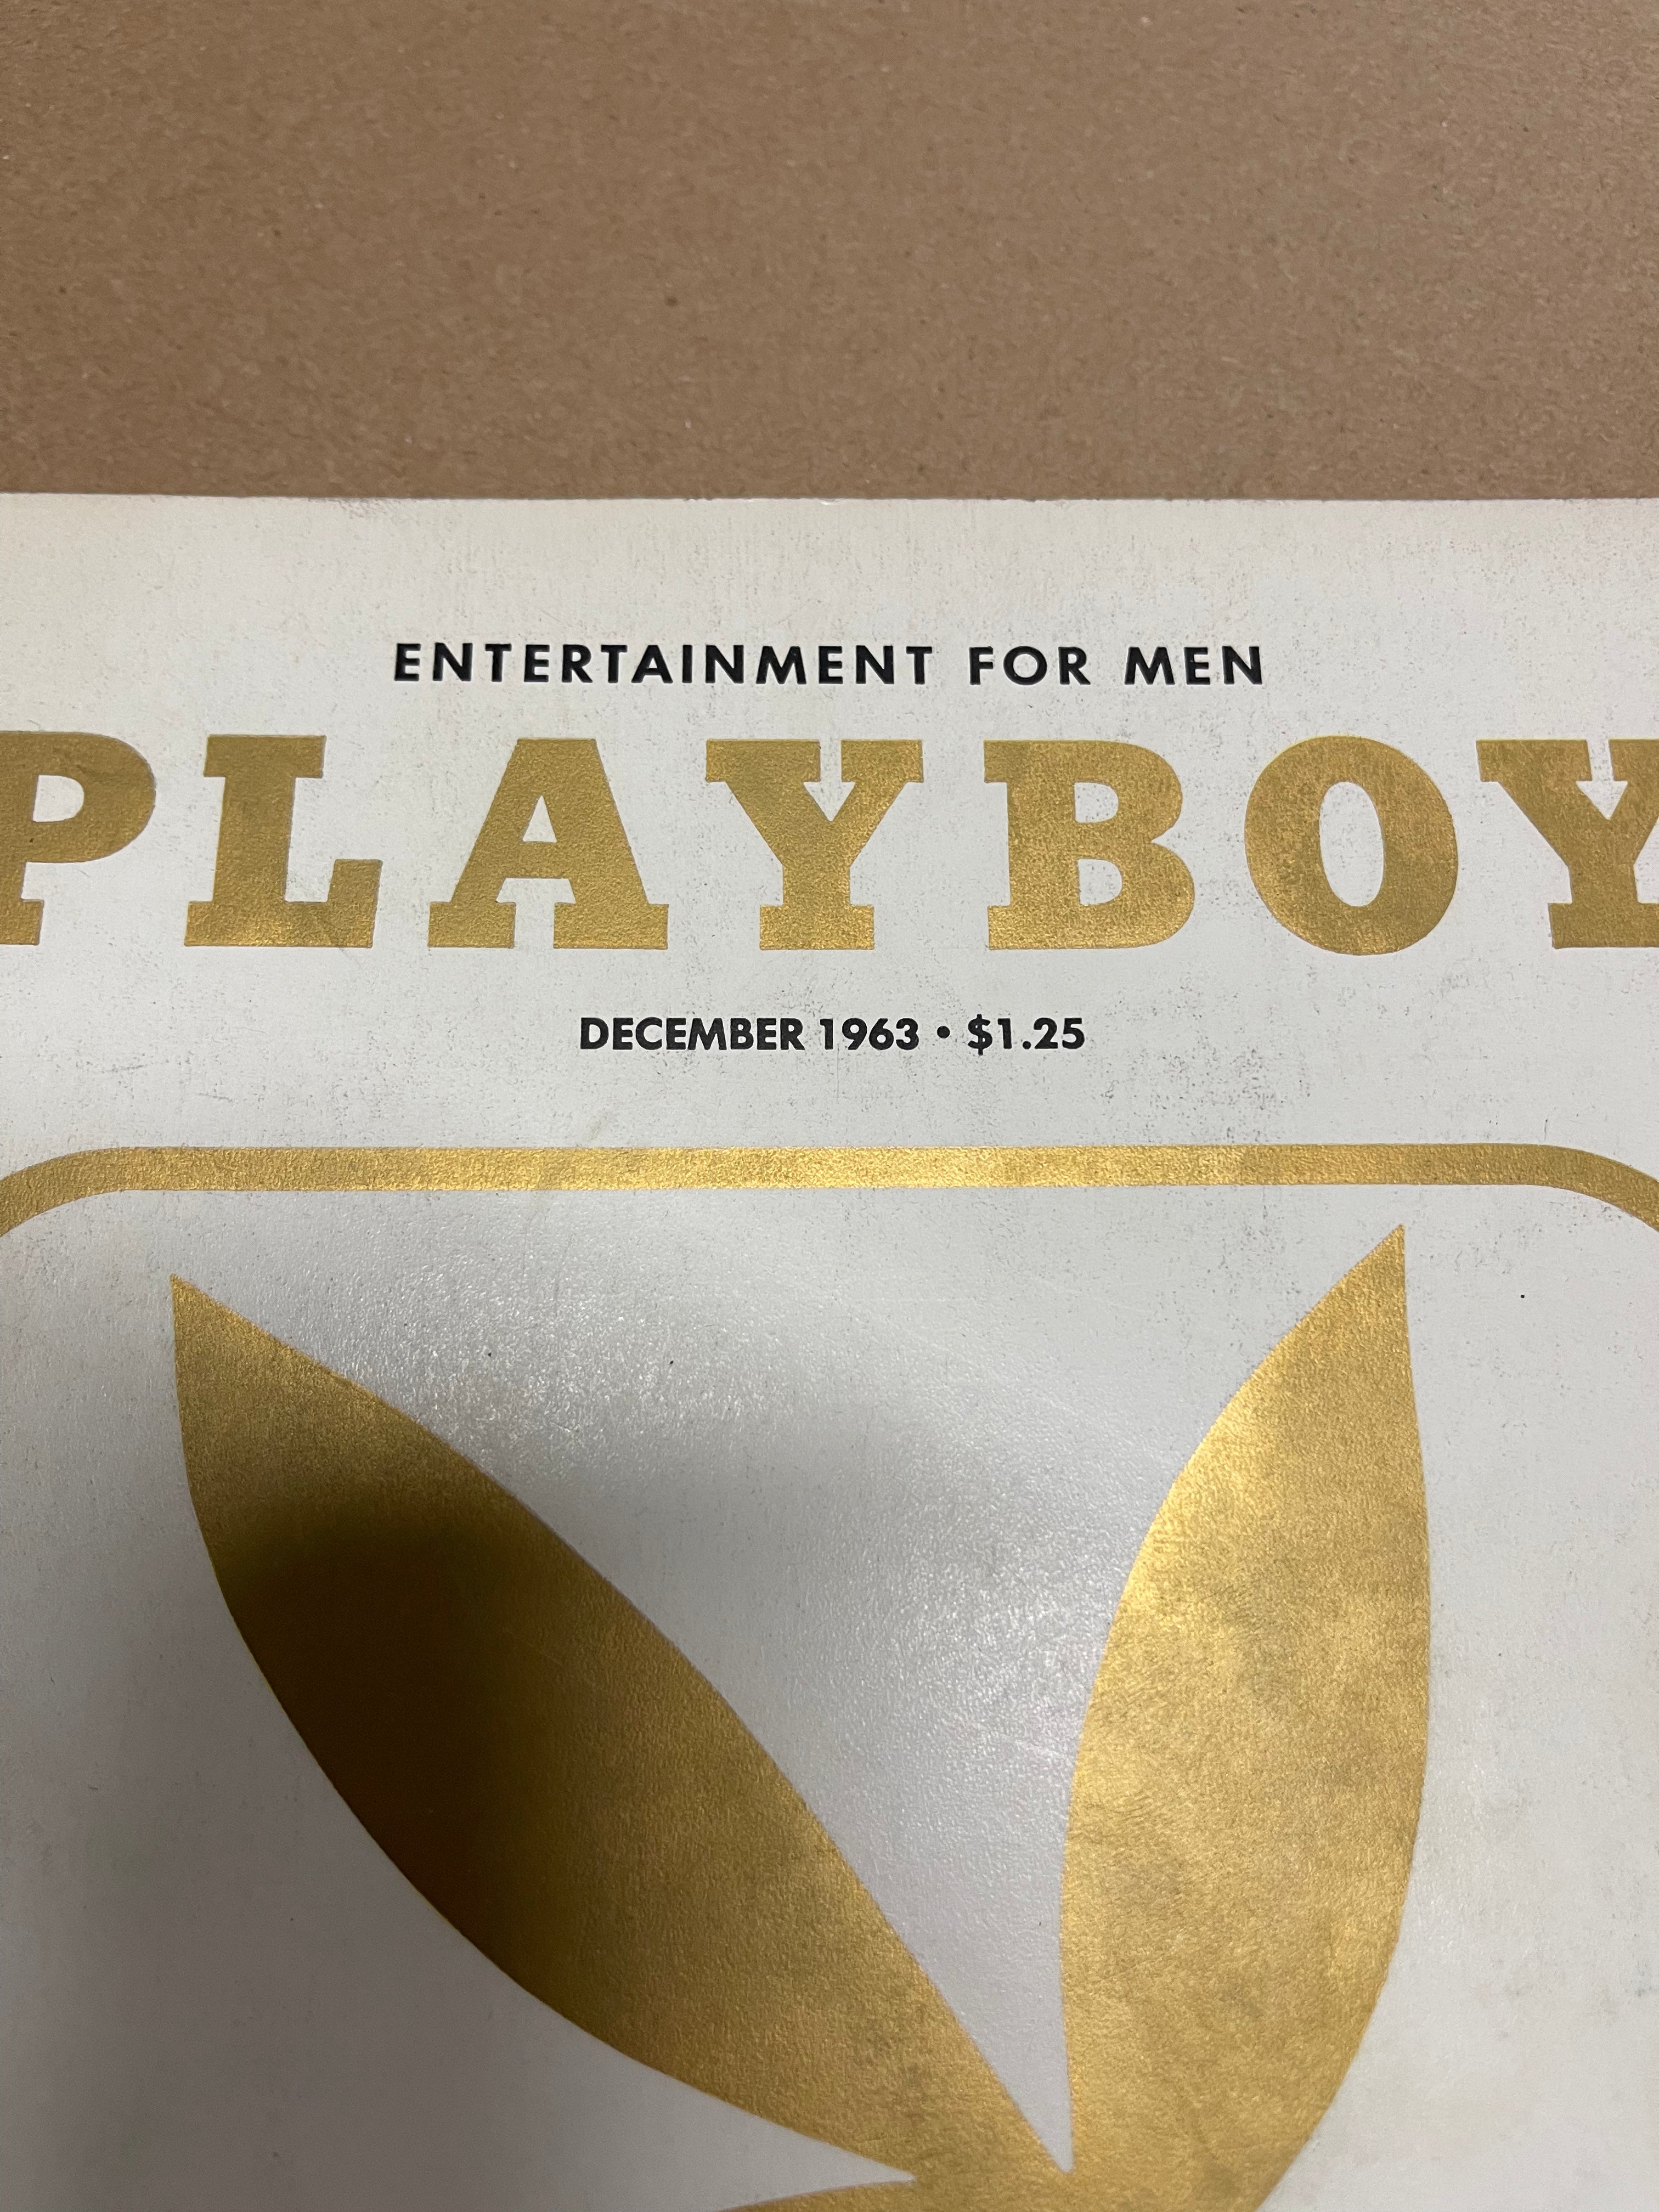 Playboy magazine 10th Holiday issue 1963